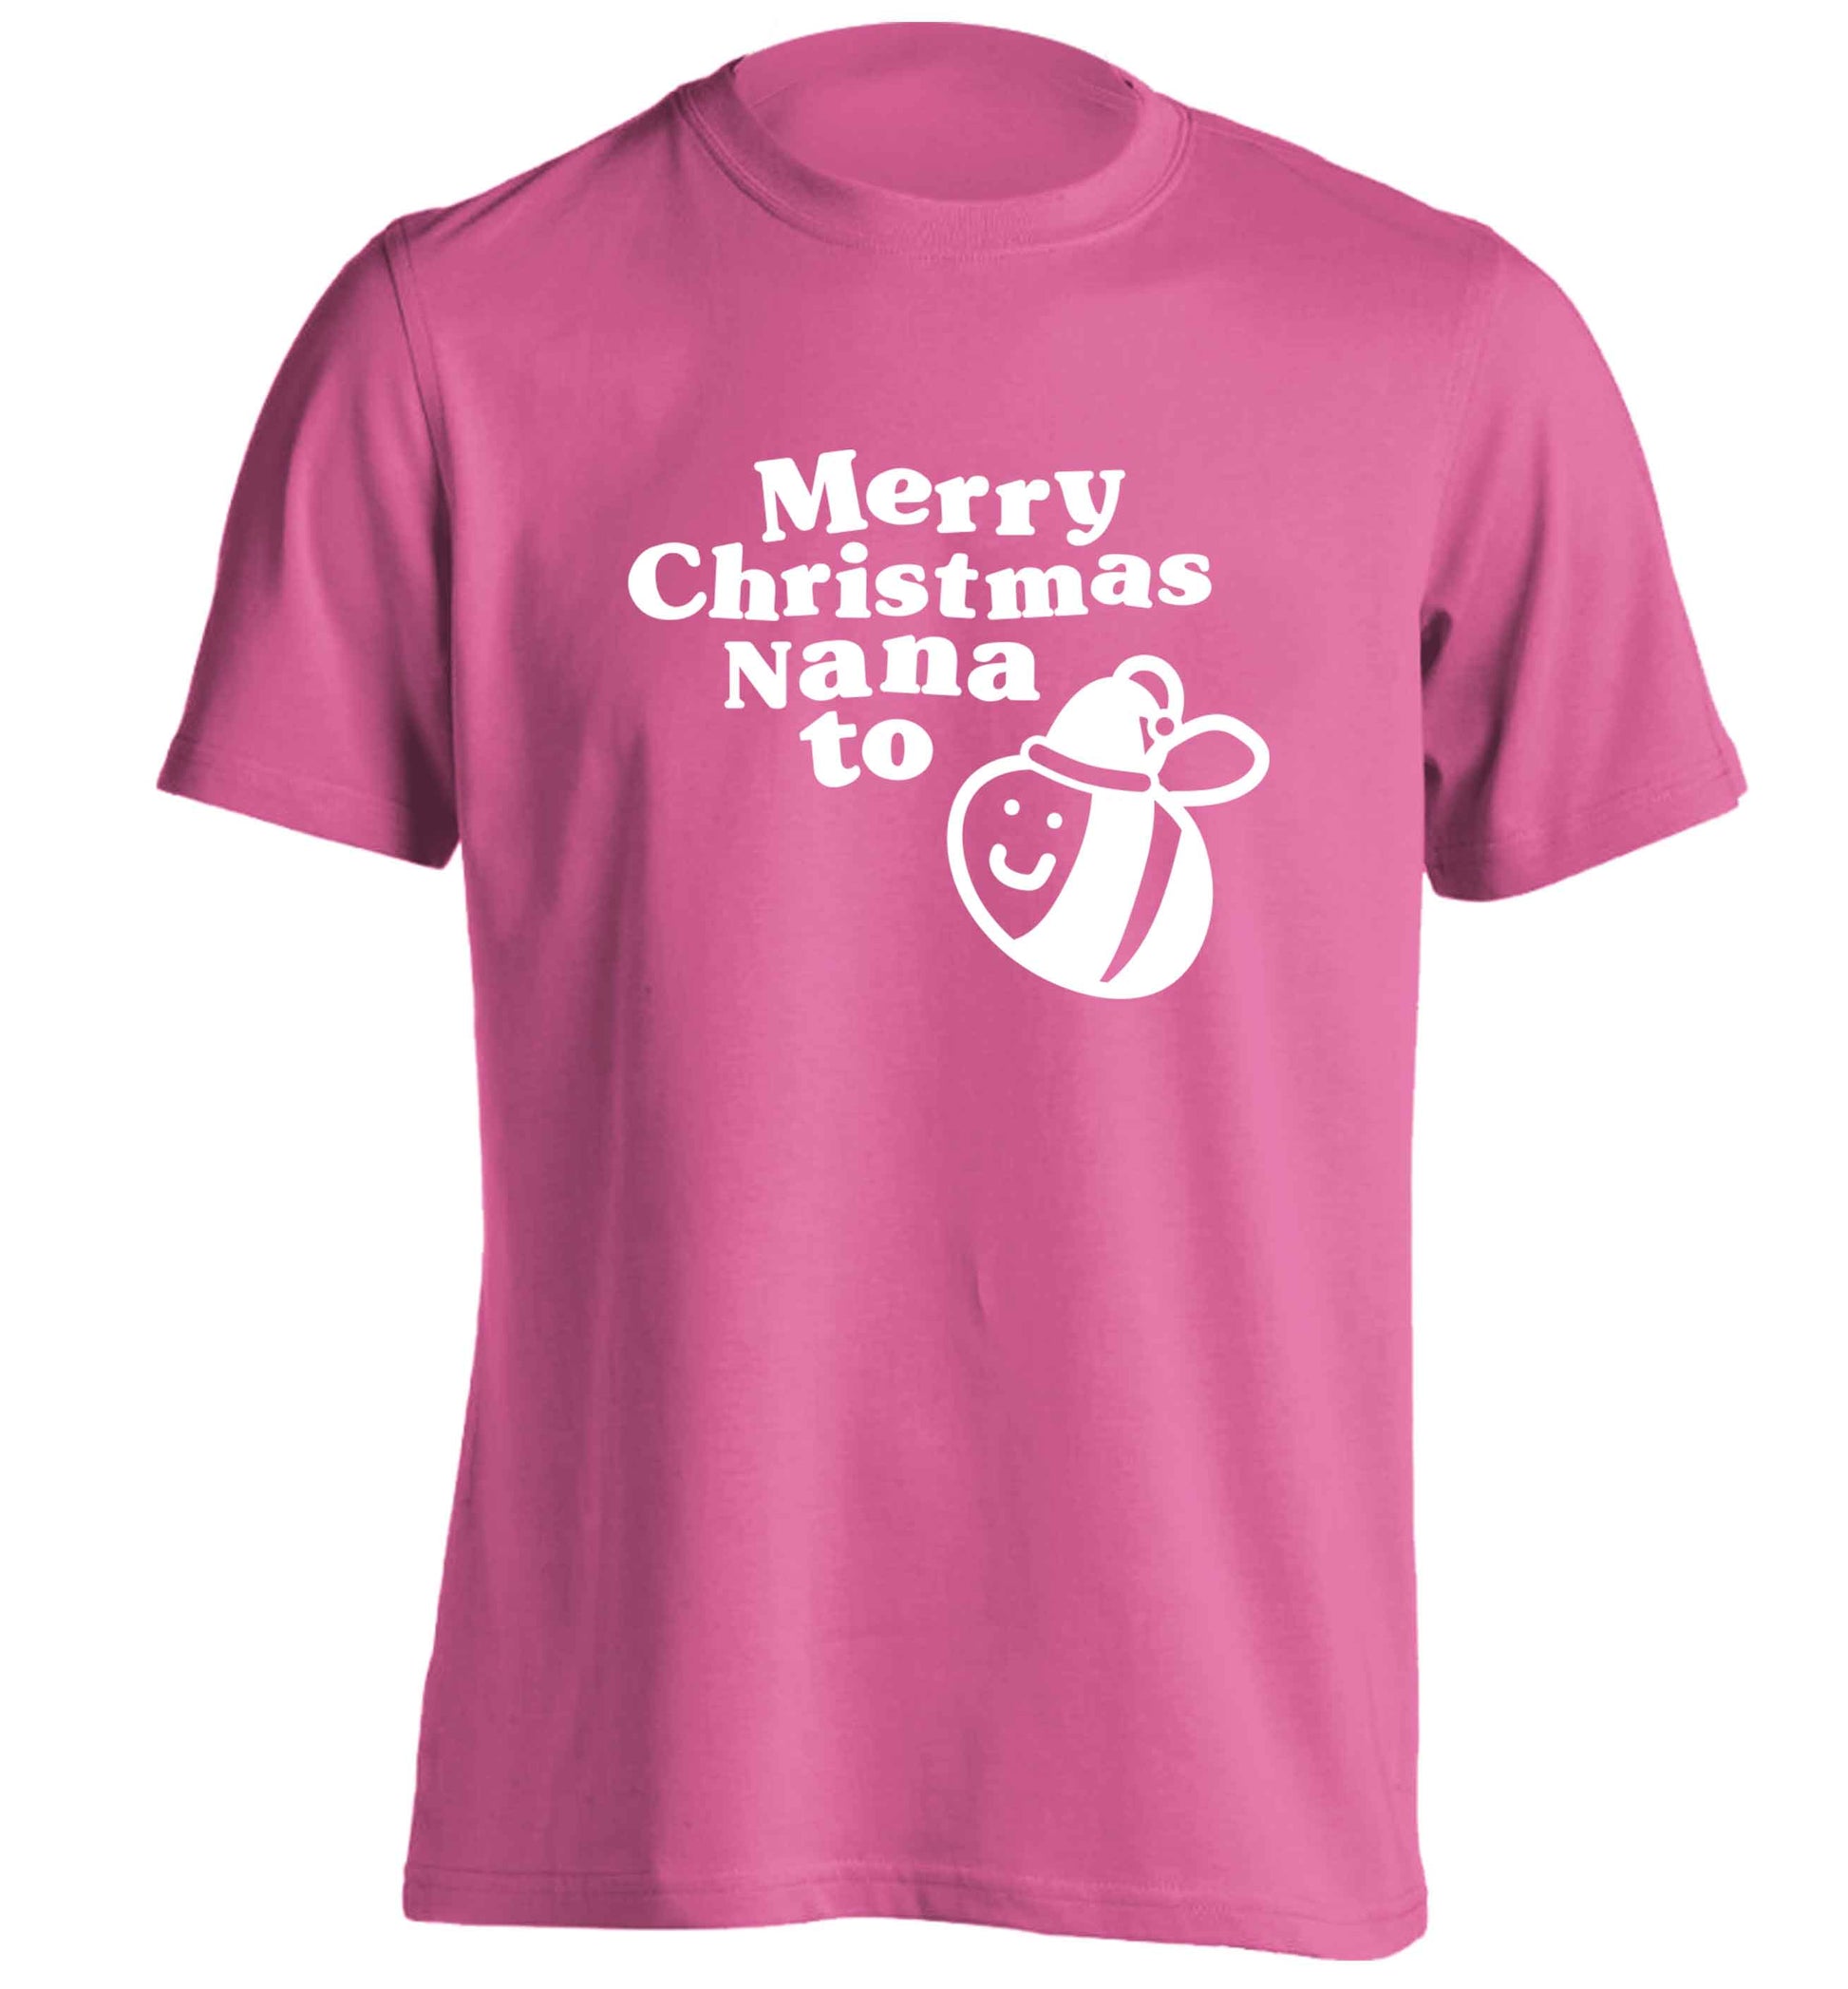 Merry Christmas nana to be adults unisex pink Tshirt 2XL